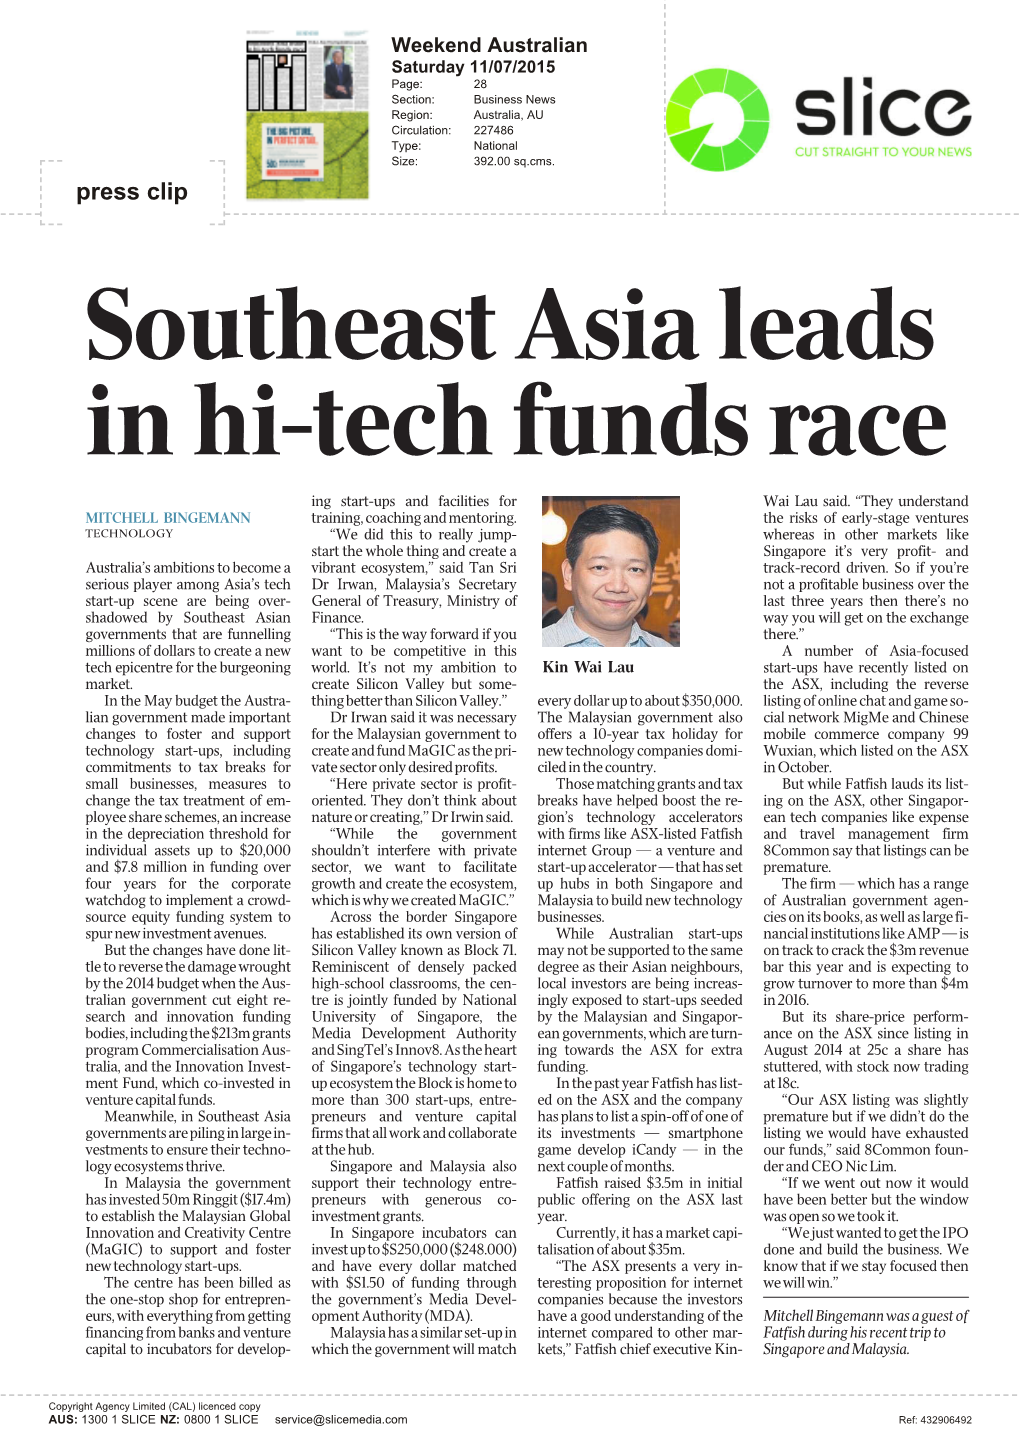 Southeast Asia Leads in Hi-Tech Funds Race